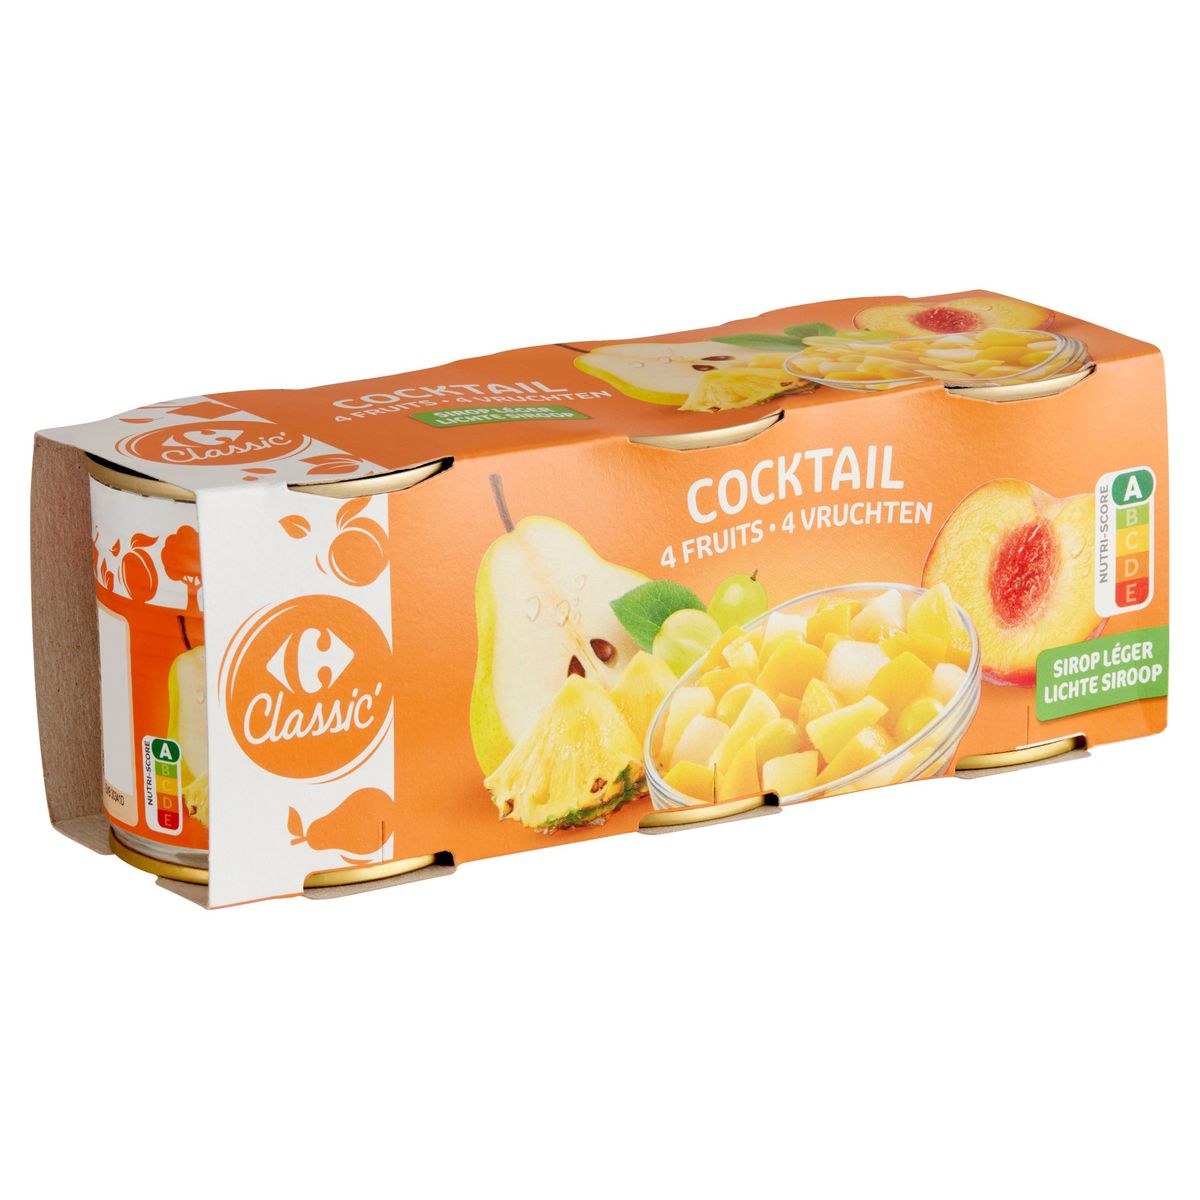 Carrefour Classic' Cocktail 4 Vruchten 3 x 212 g